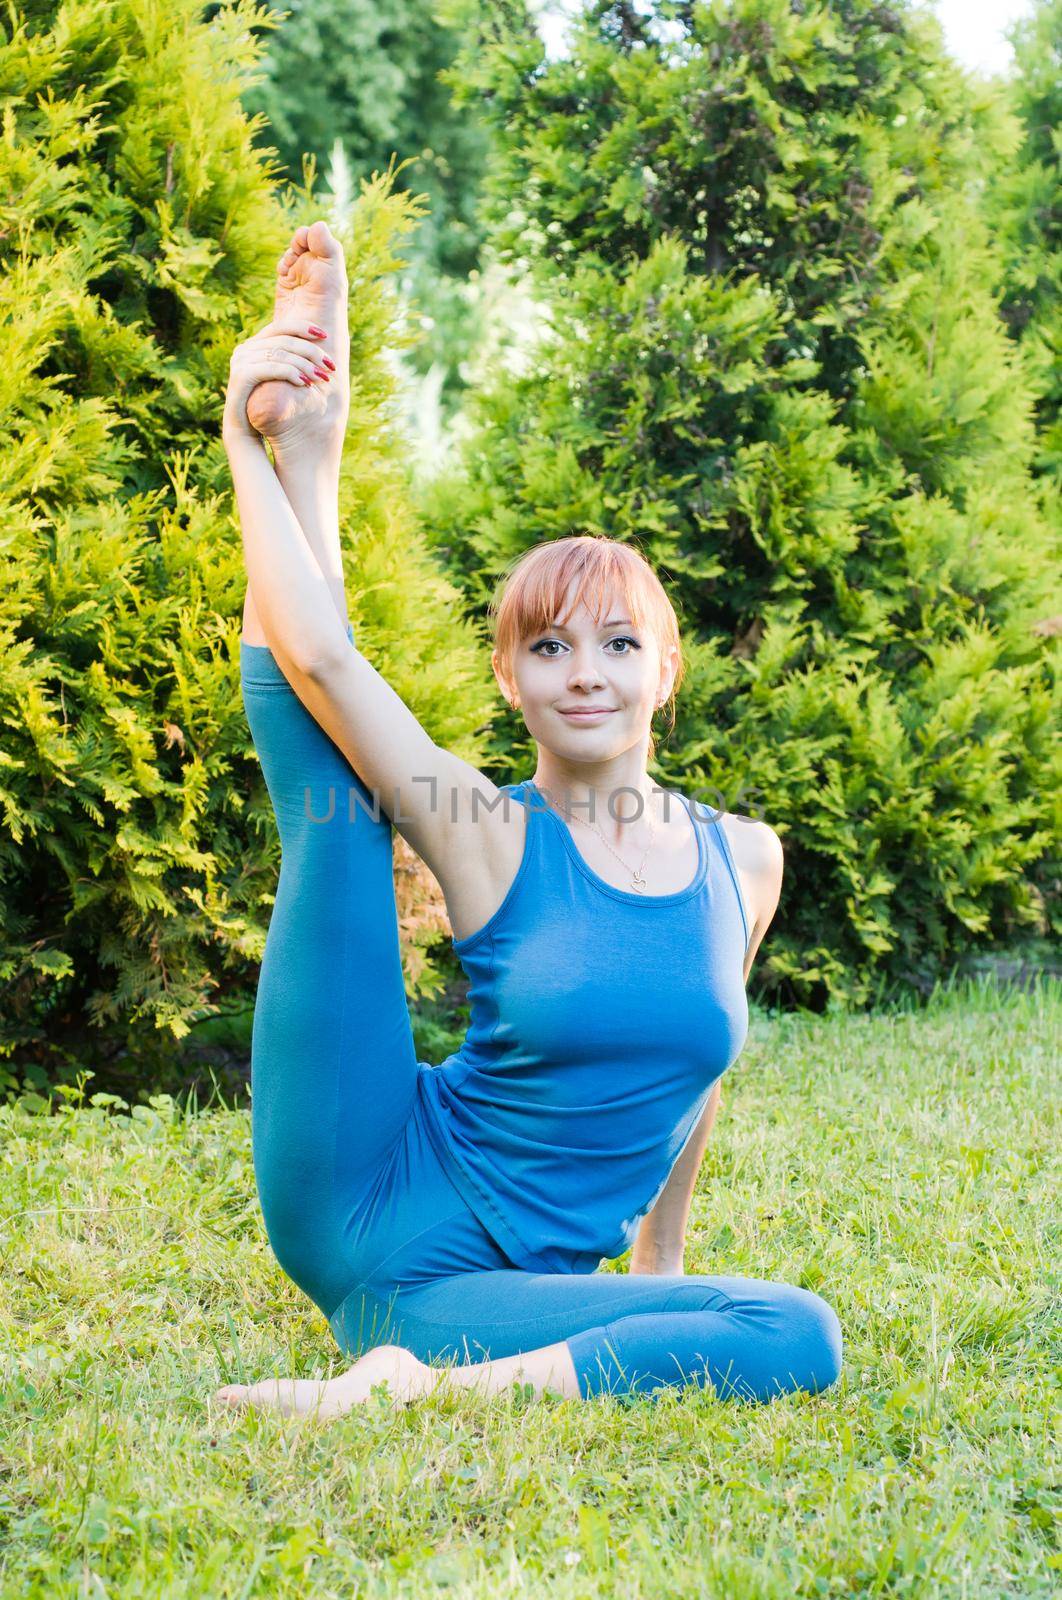 Beautiful red woman doing fitness or yoga exercises by nikitabuida